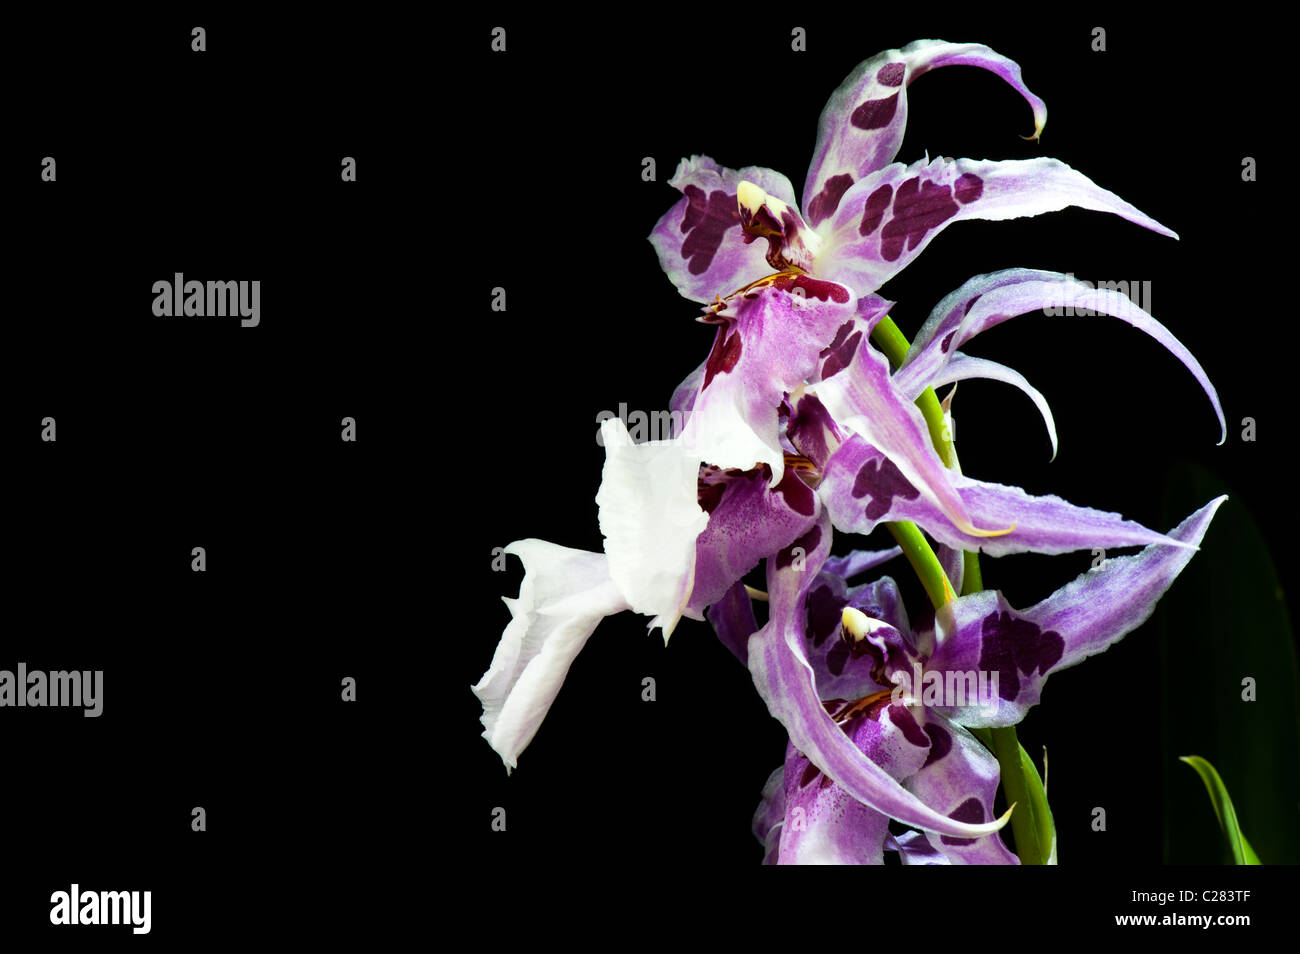 Beallara peggy ruth carpenter orchid. Hybrid Beallara orchid flower against black background Stock Photo